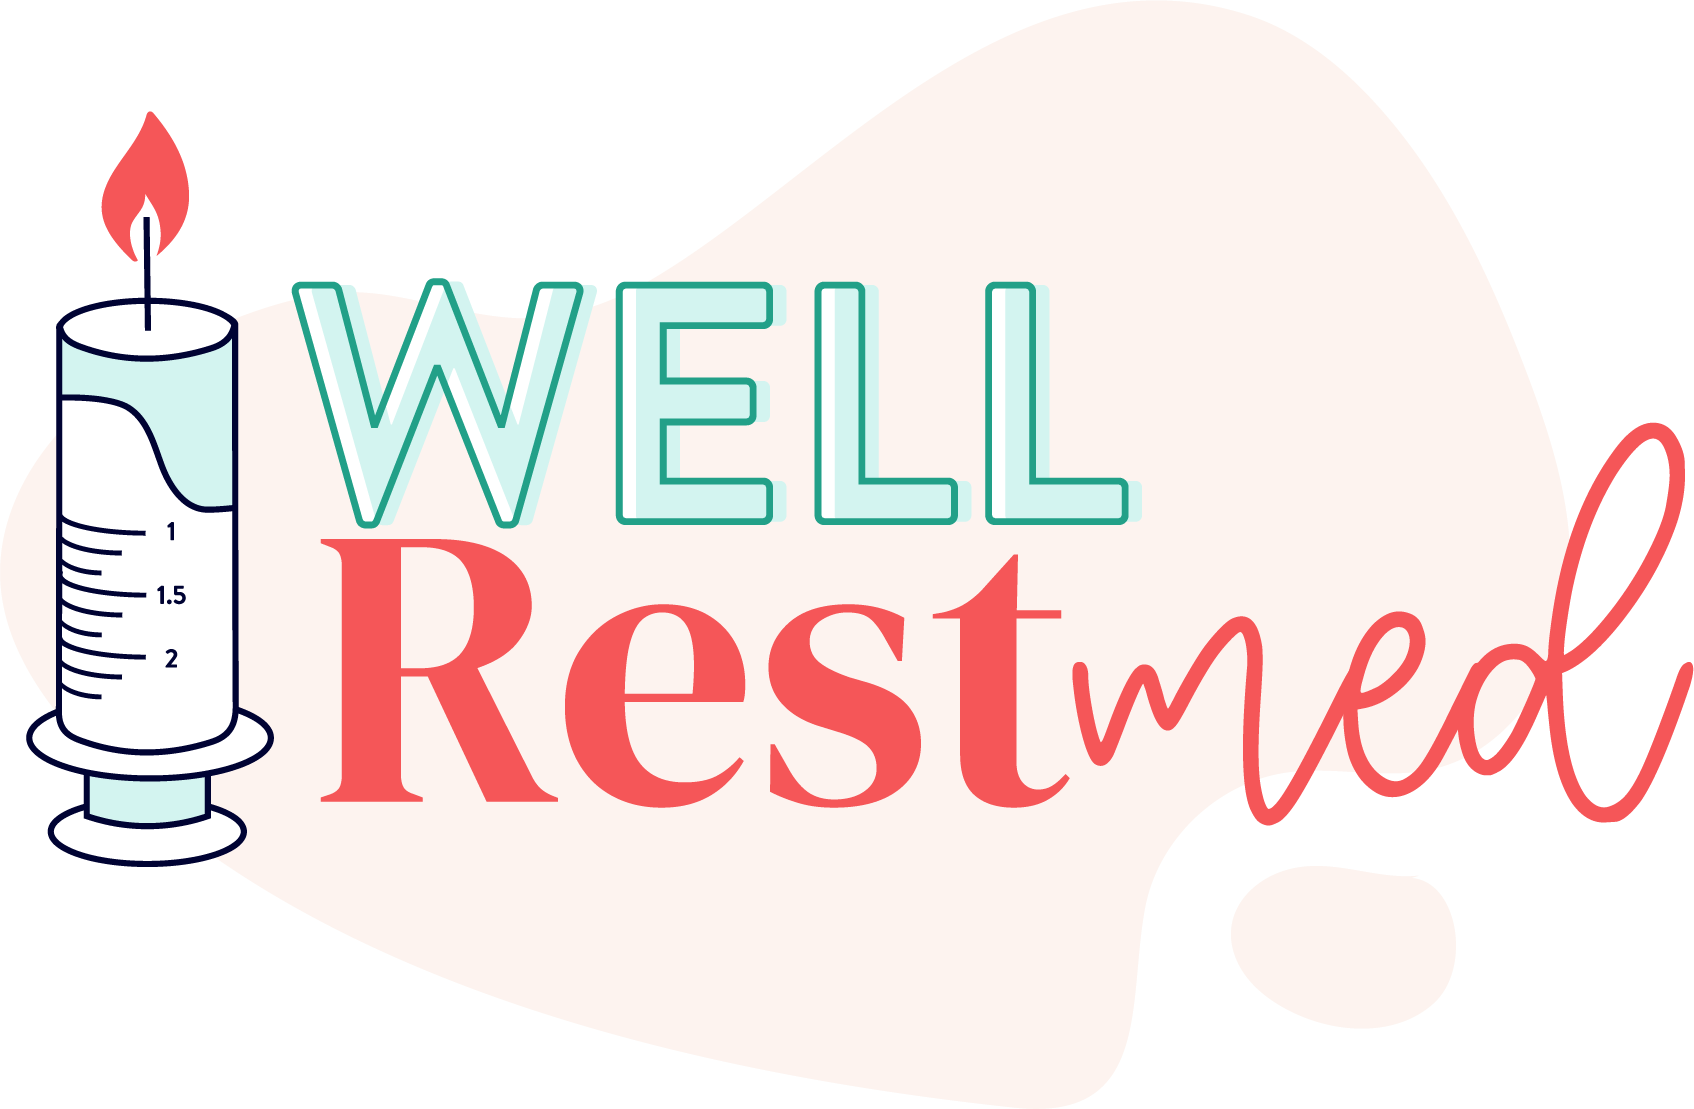 Well-restmed